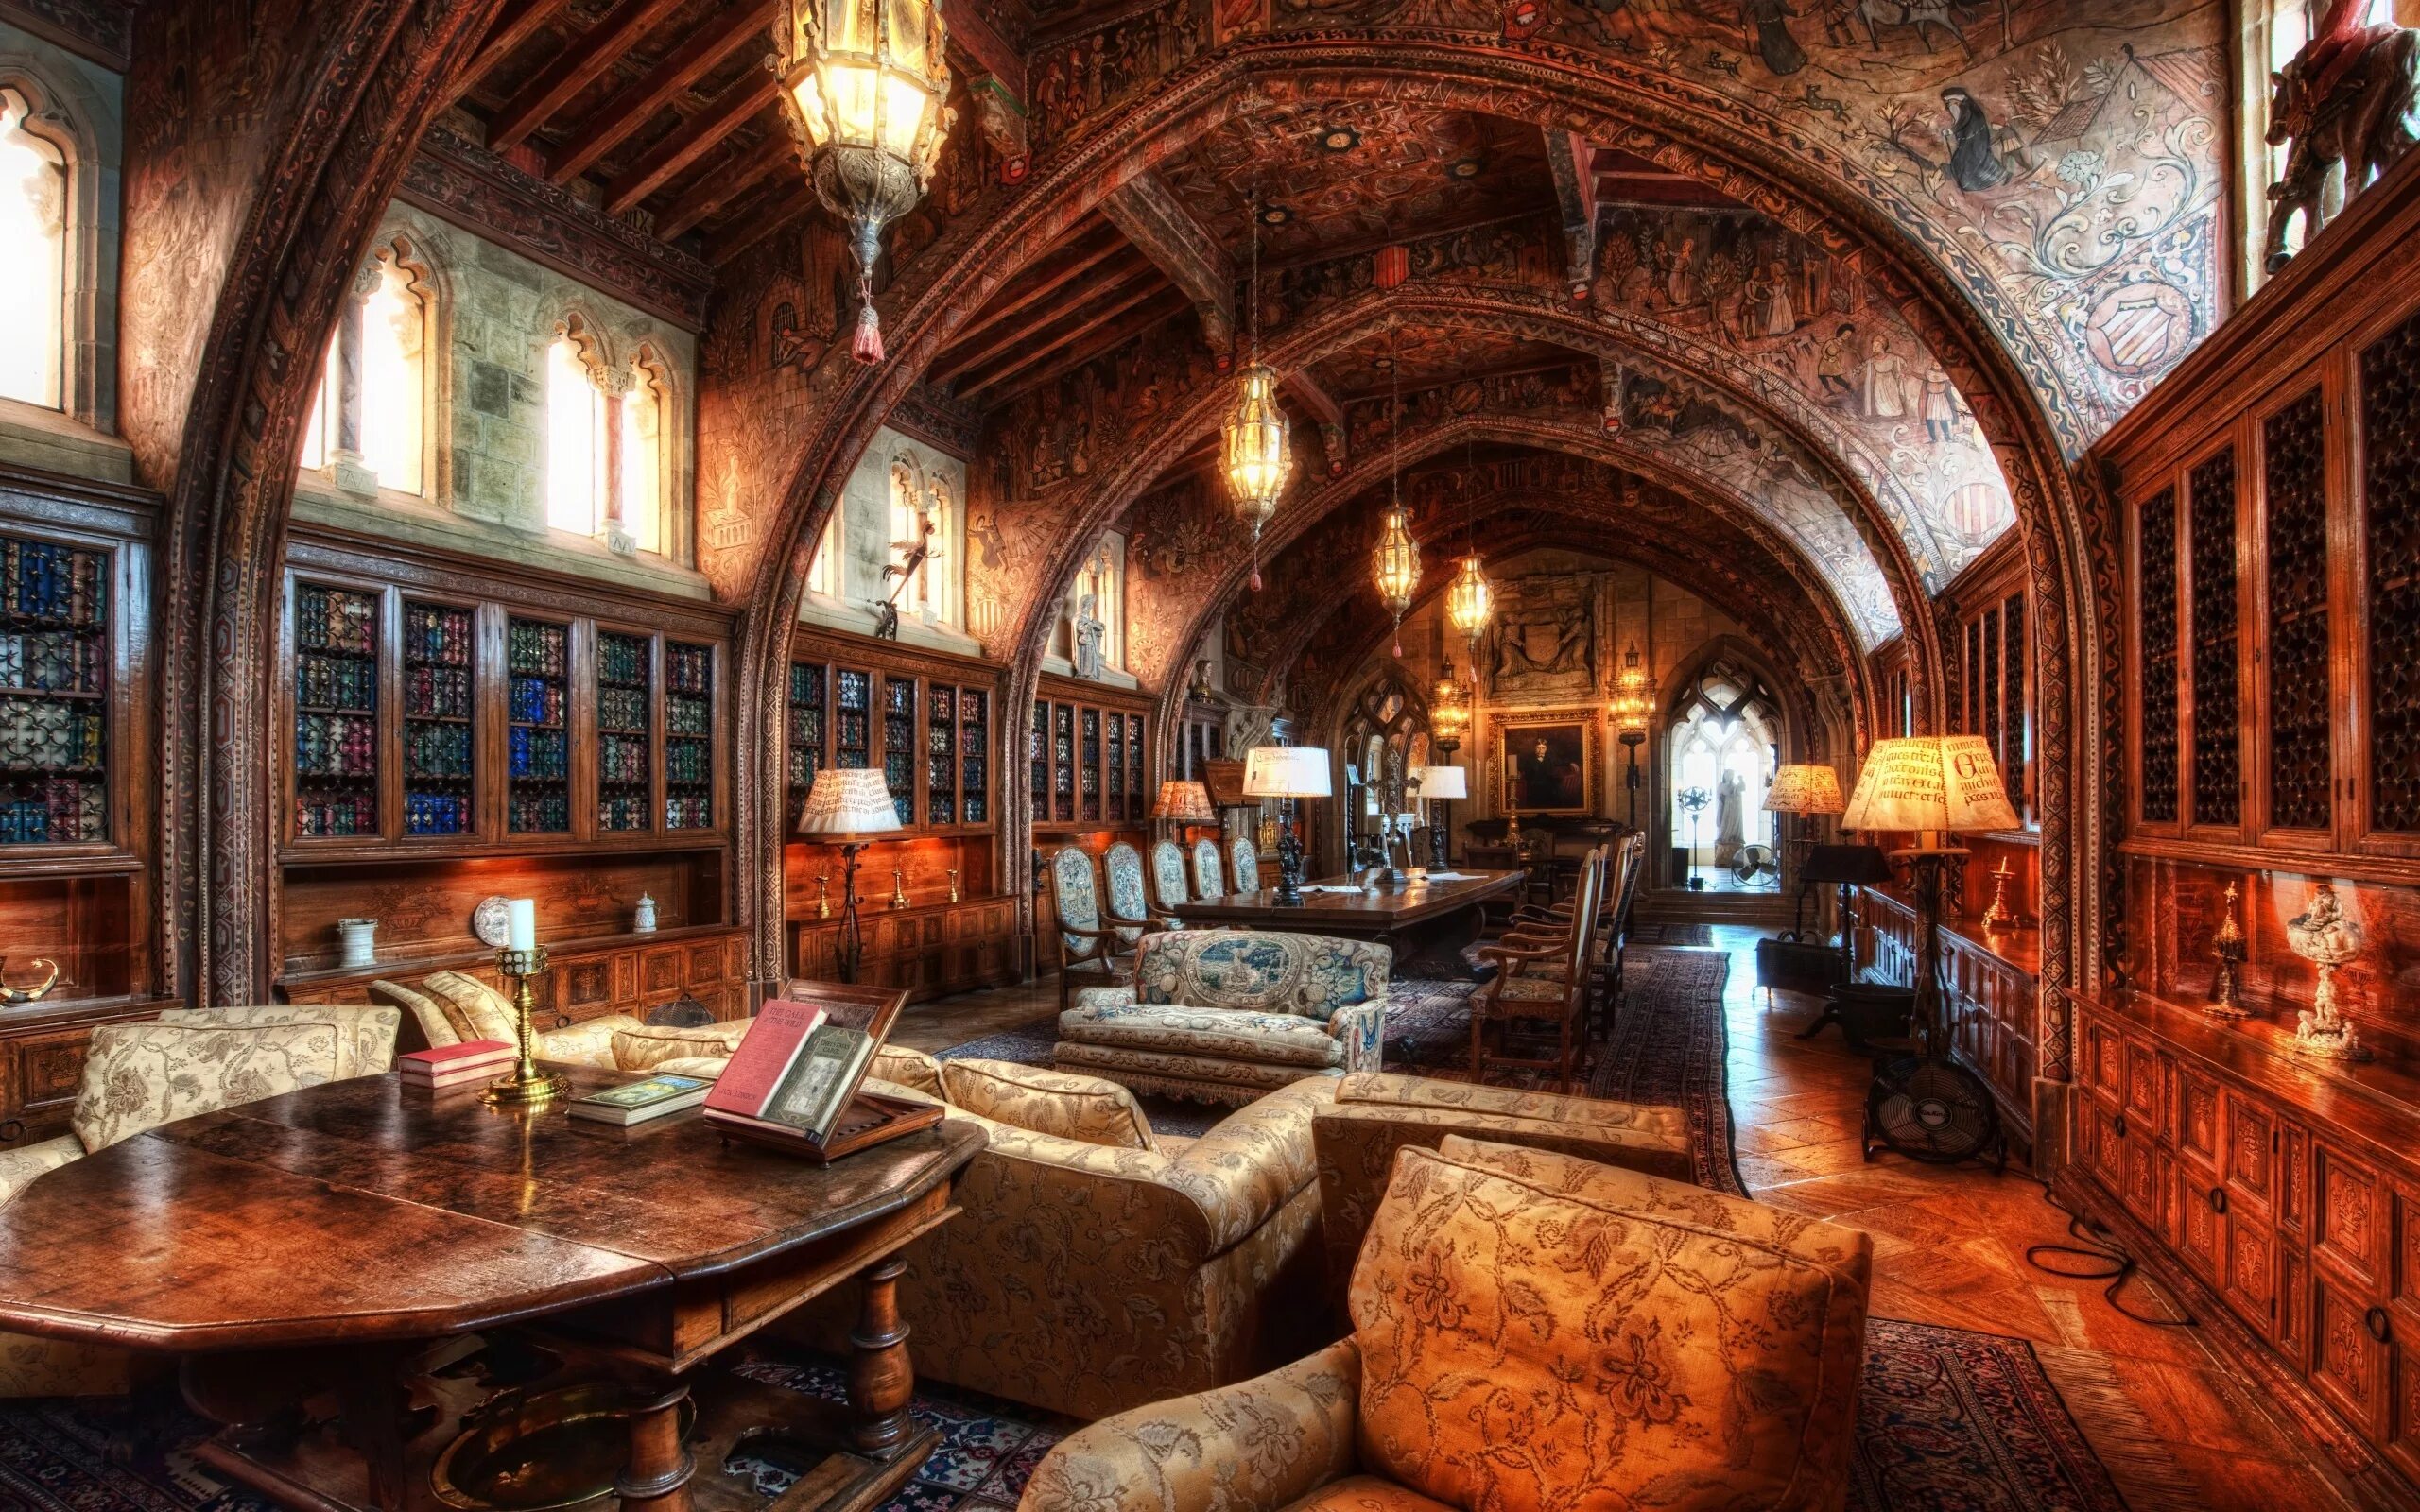 Интерьер литературных произведений. Библиотека Hearst Castle. Хогвартс гостиная Гриффиндора.